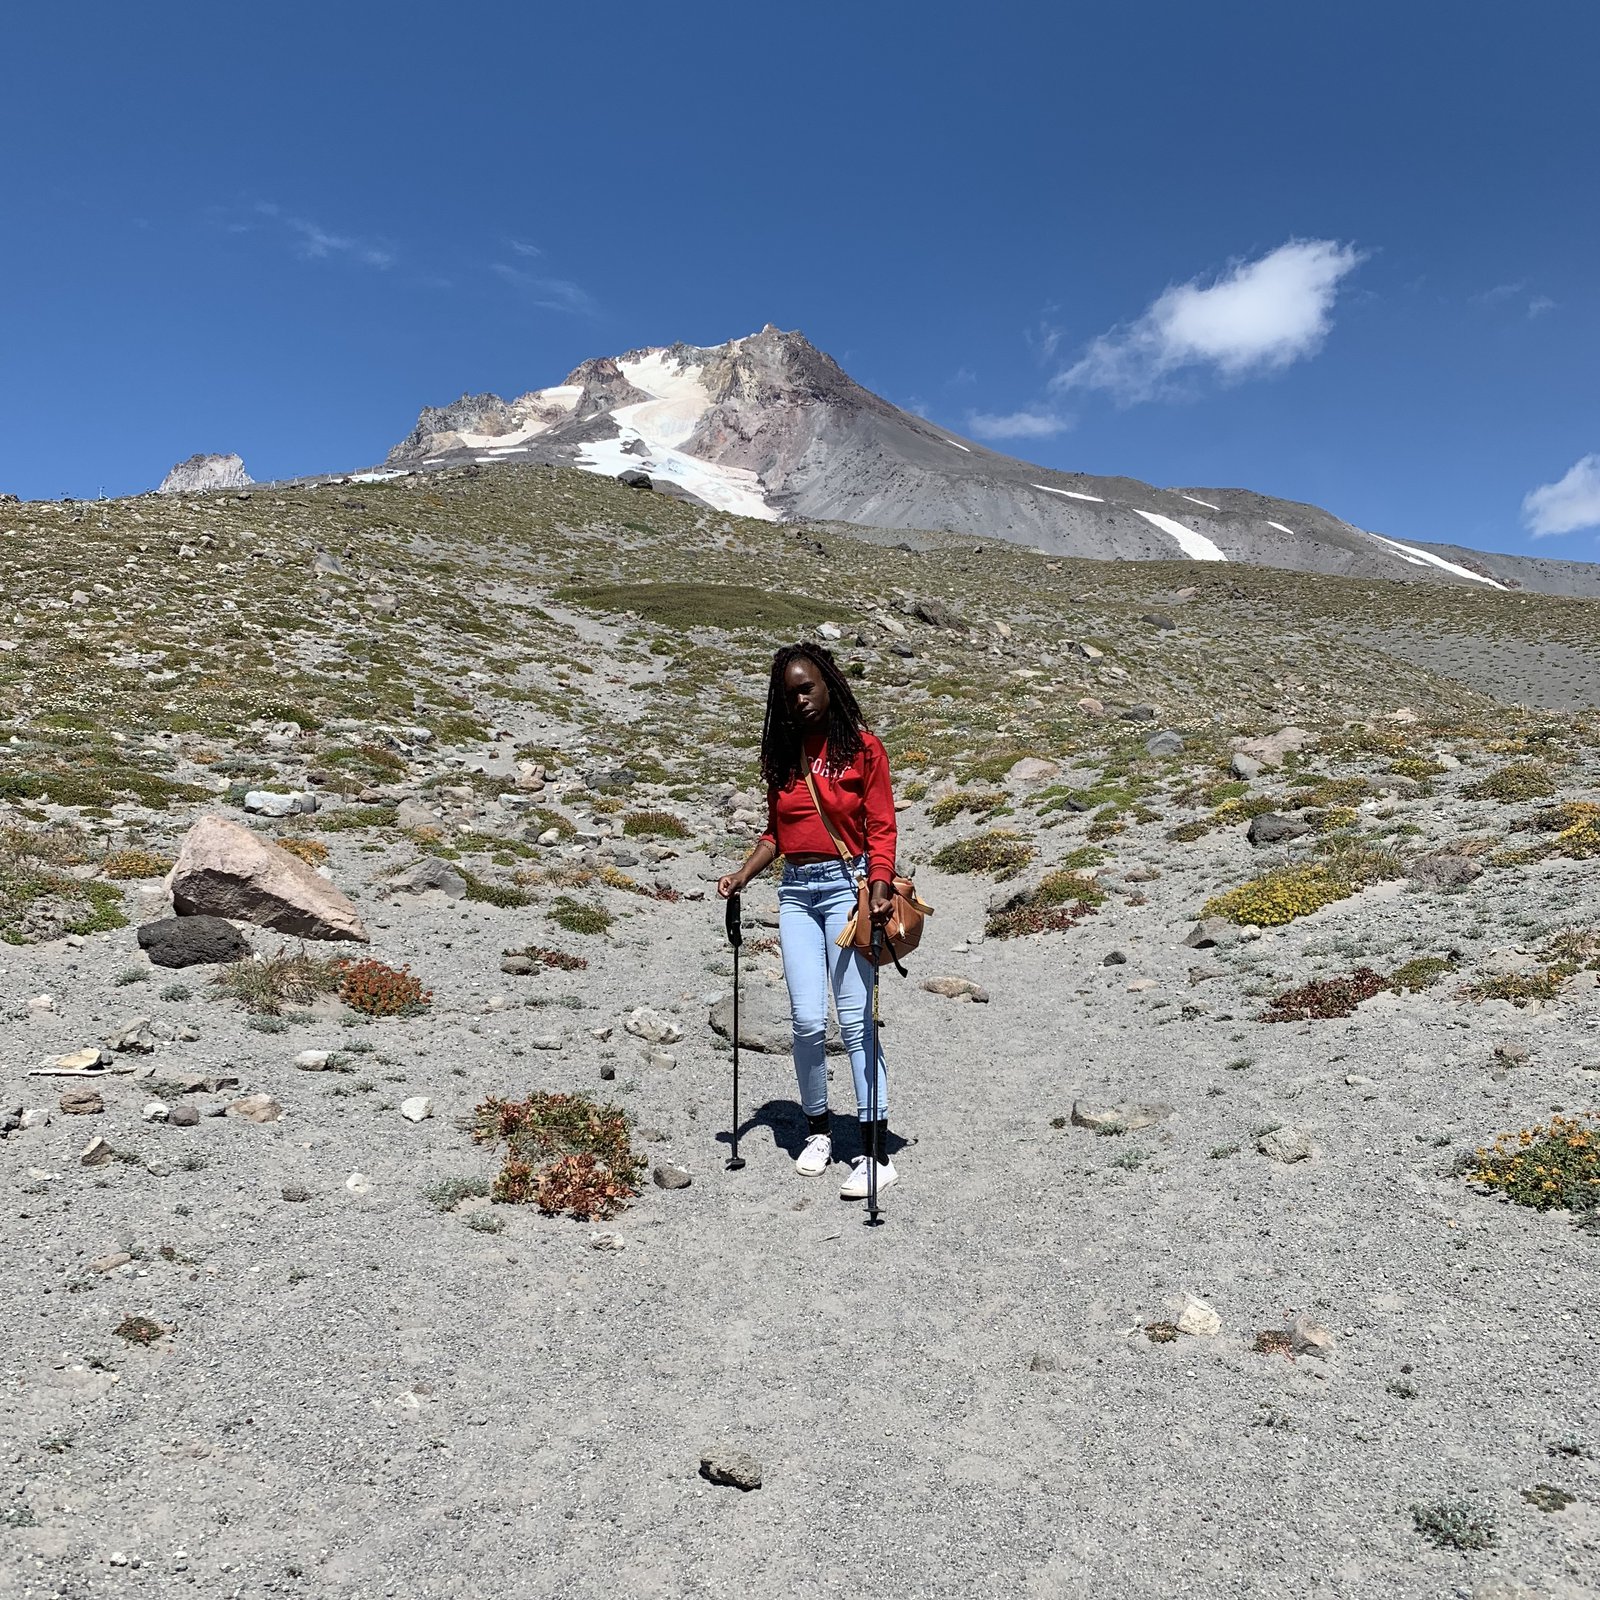 My girlfriend hiking Mt.Hood with me